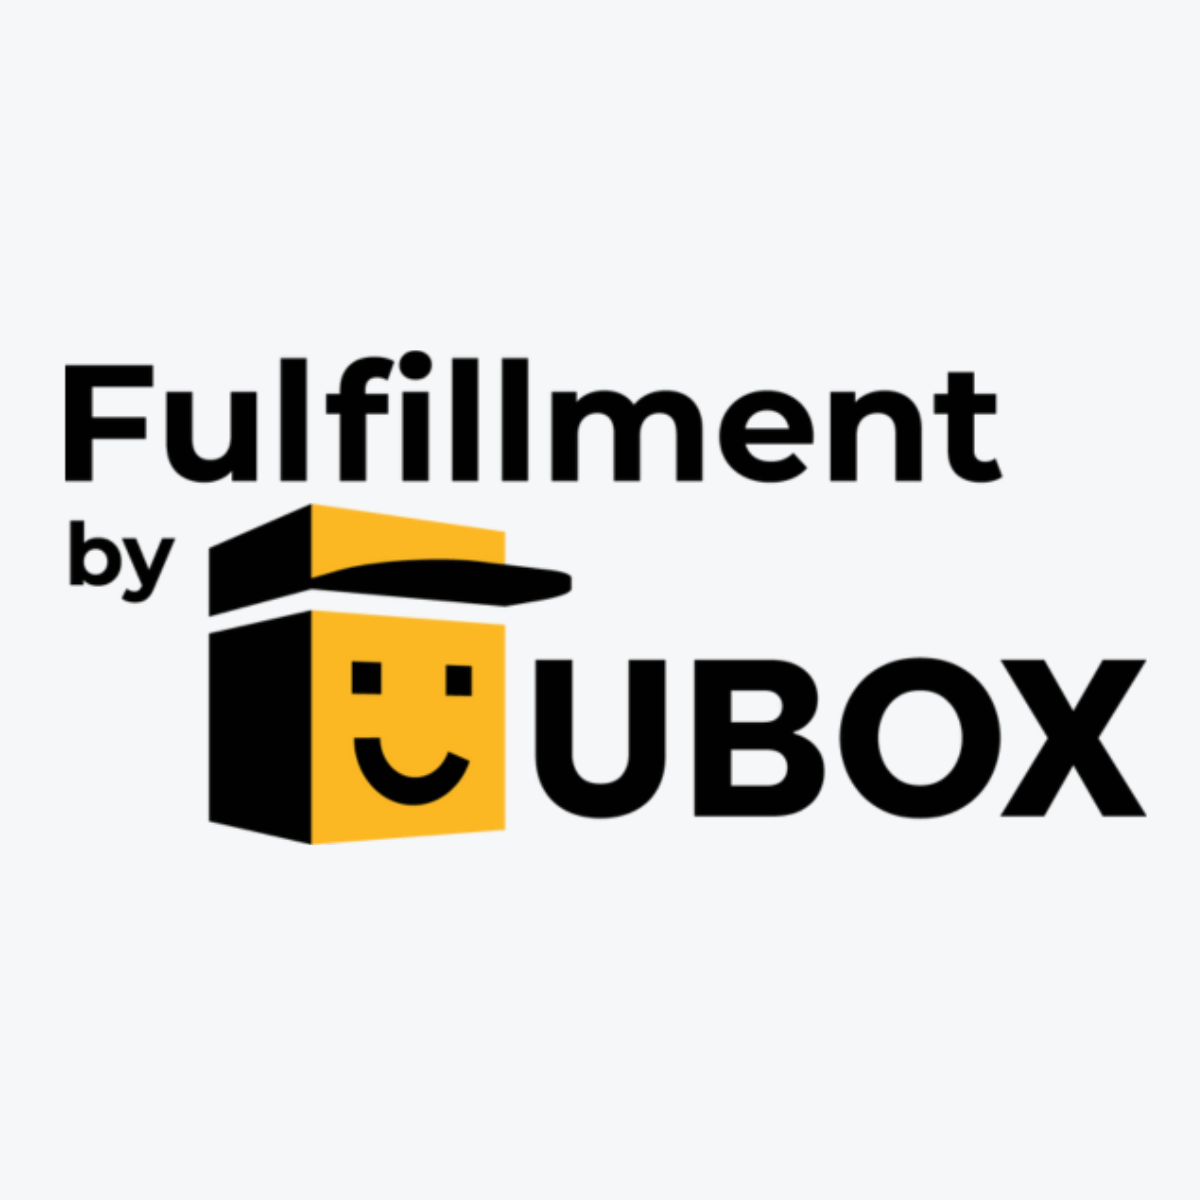 FULFILLMENT BY UBOX